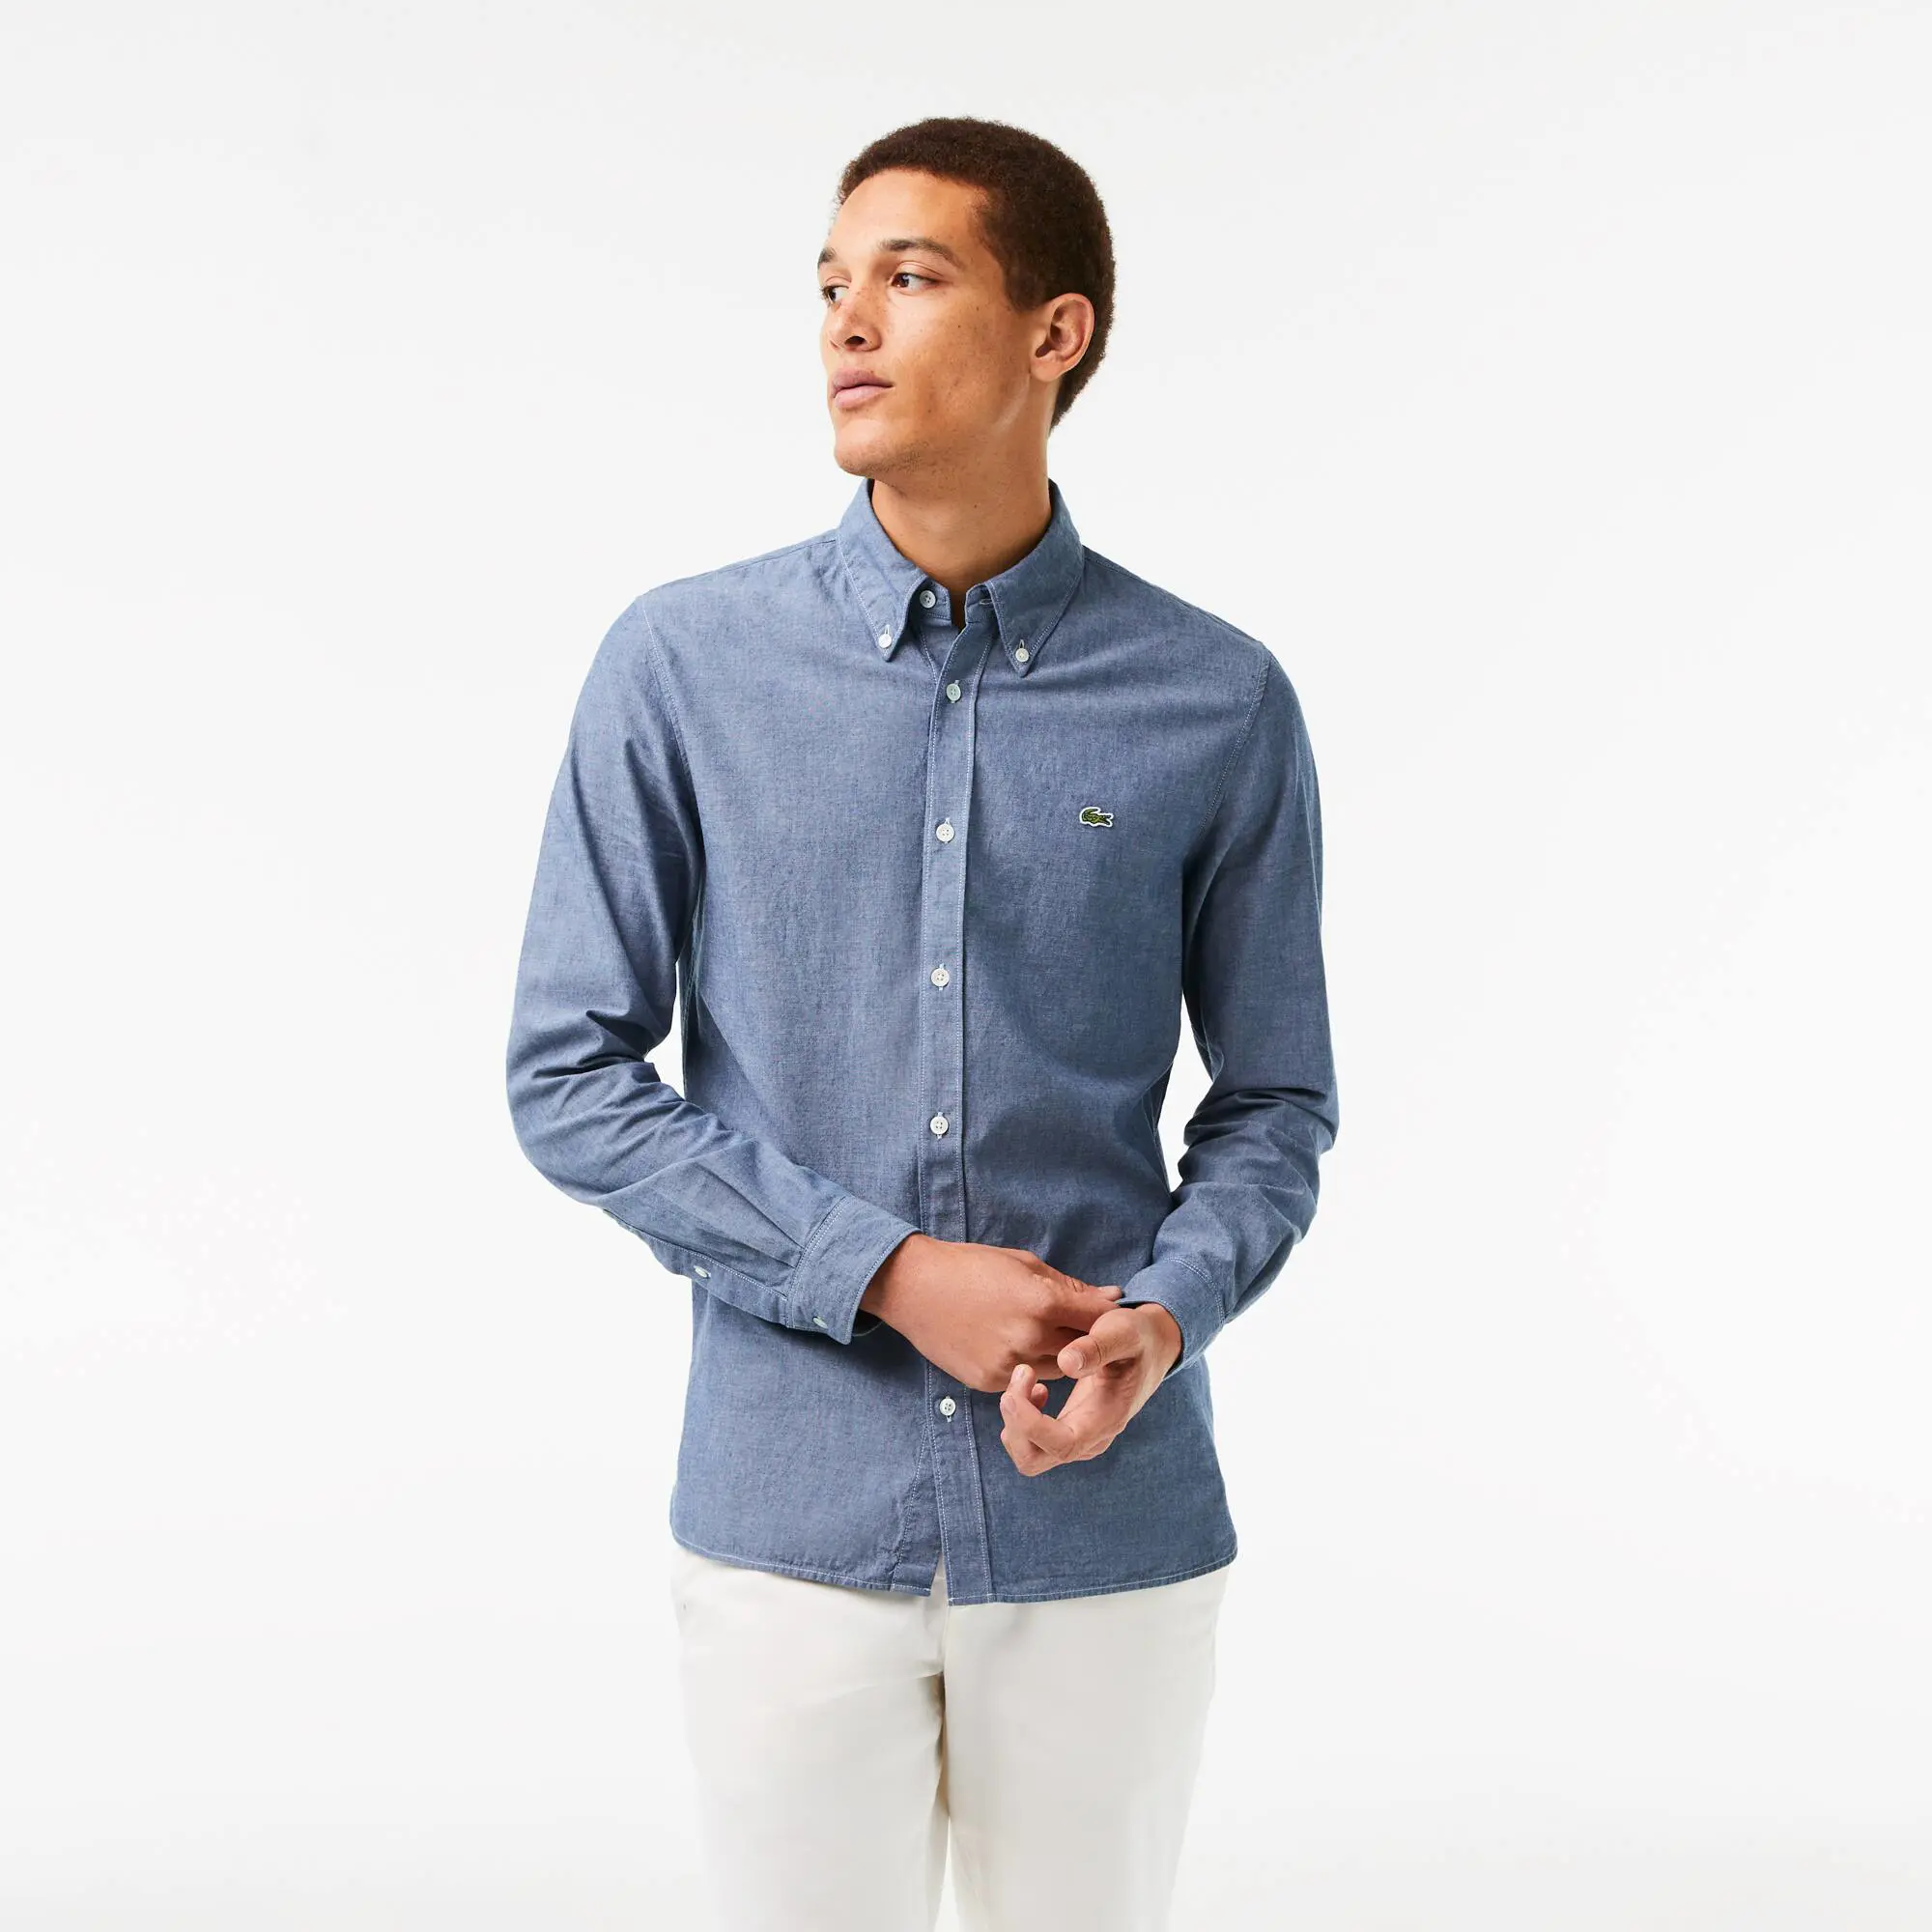 Lacoste Men's Slim Fit Cotton Chambray Shirt. 1